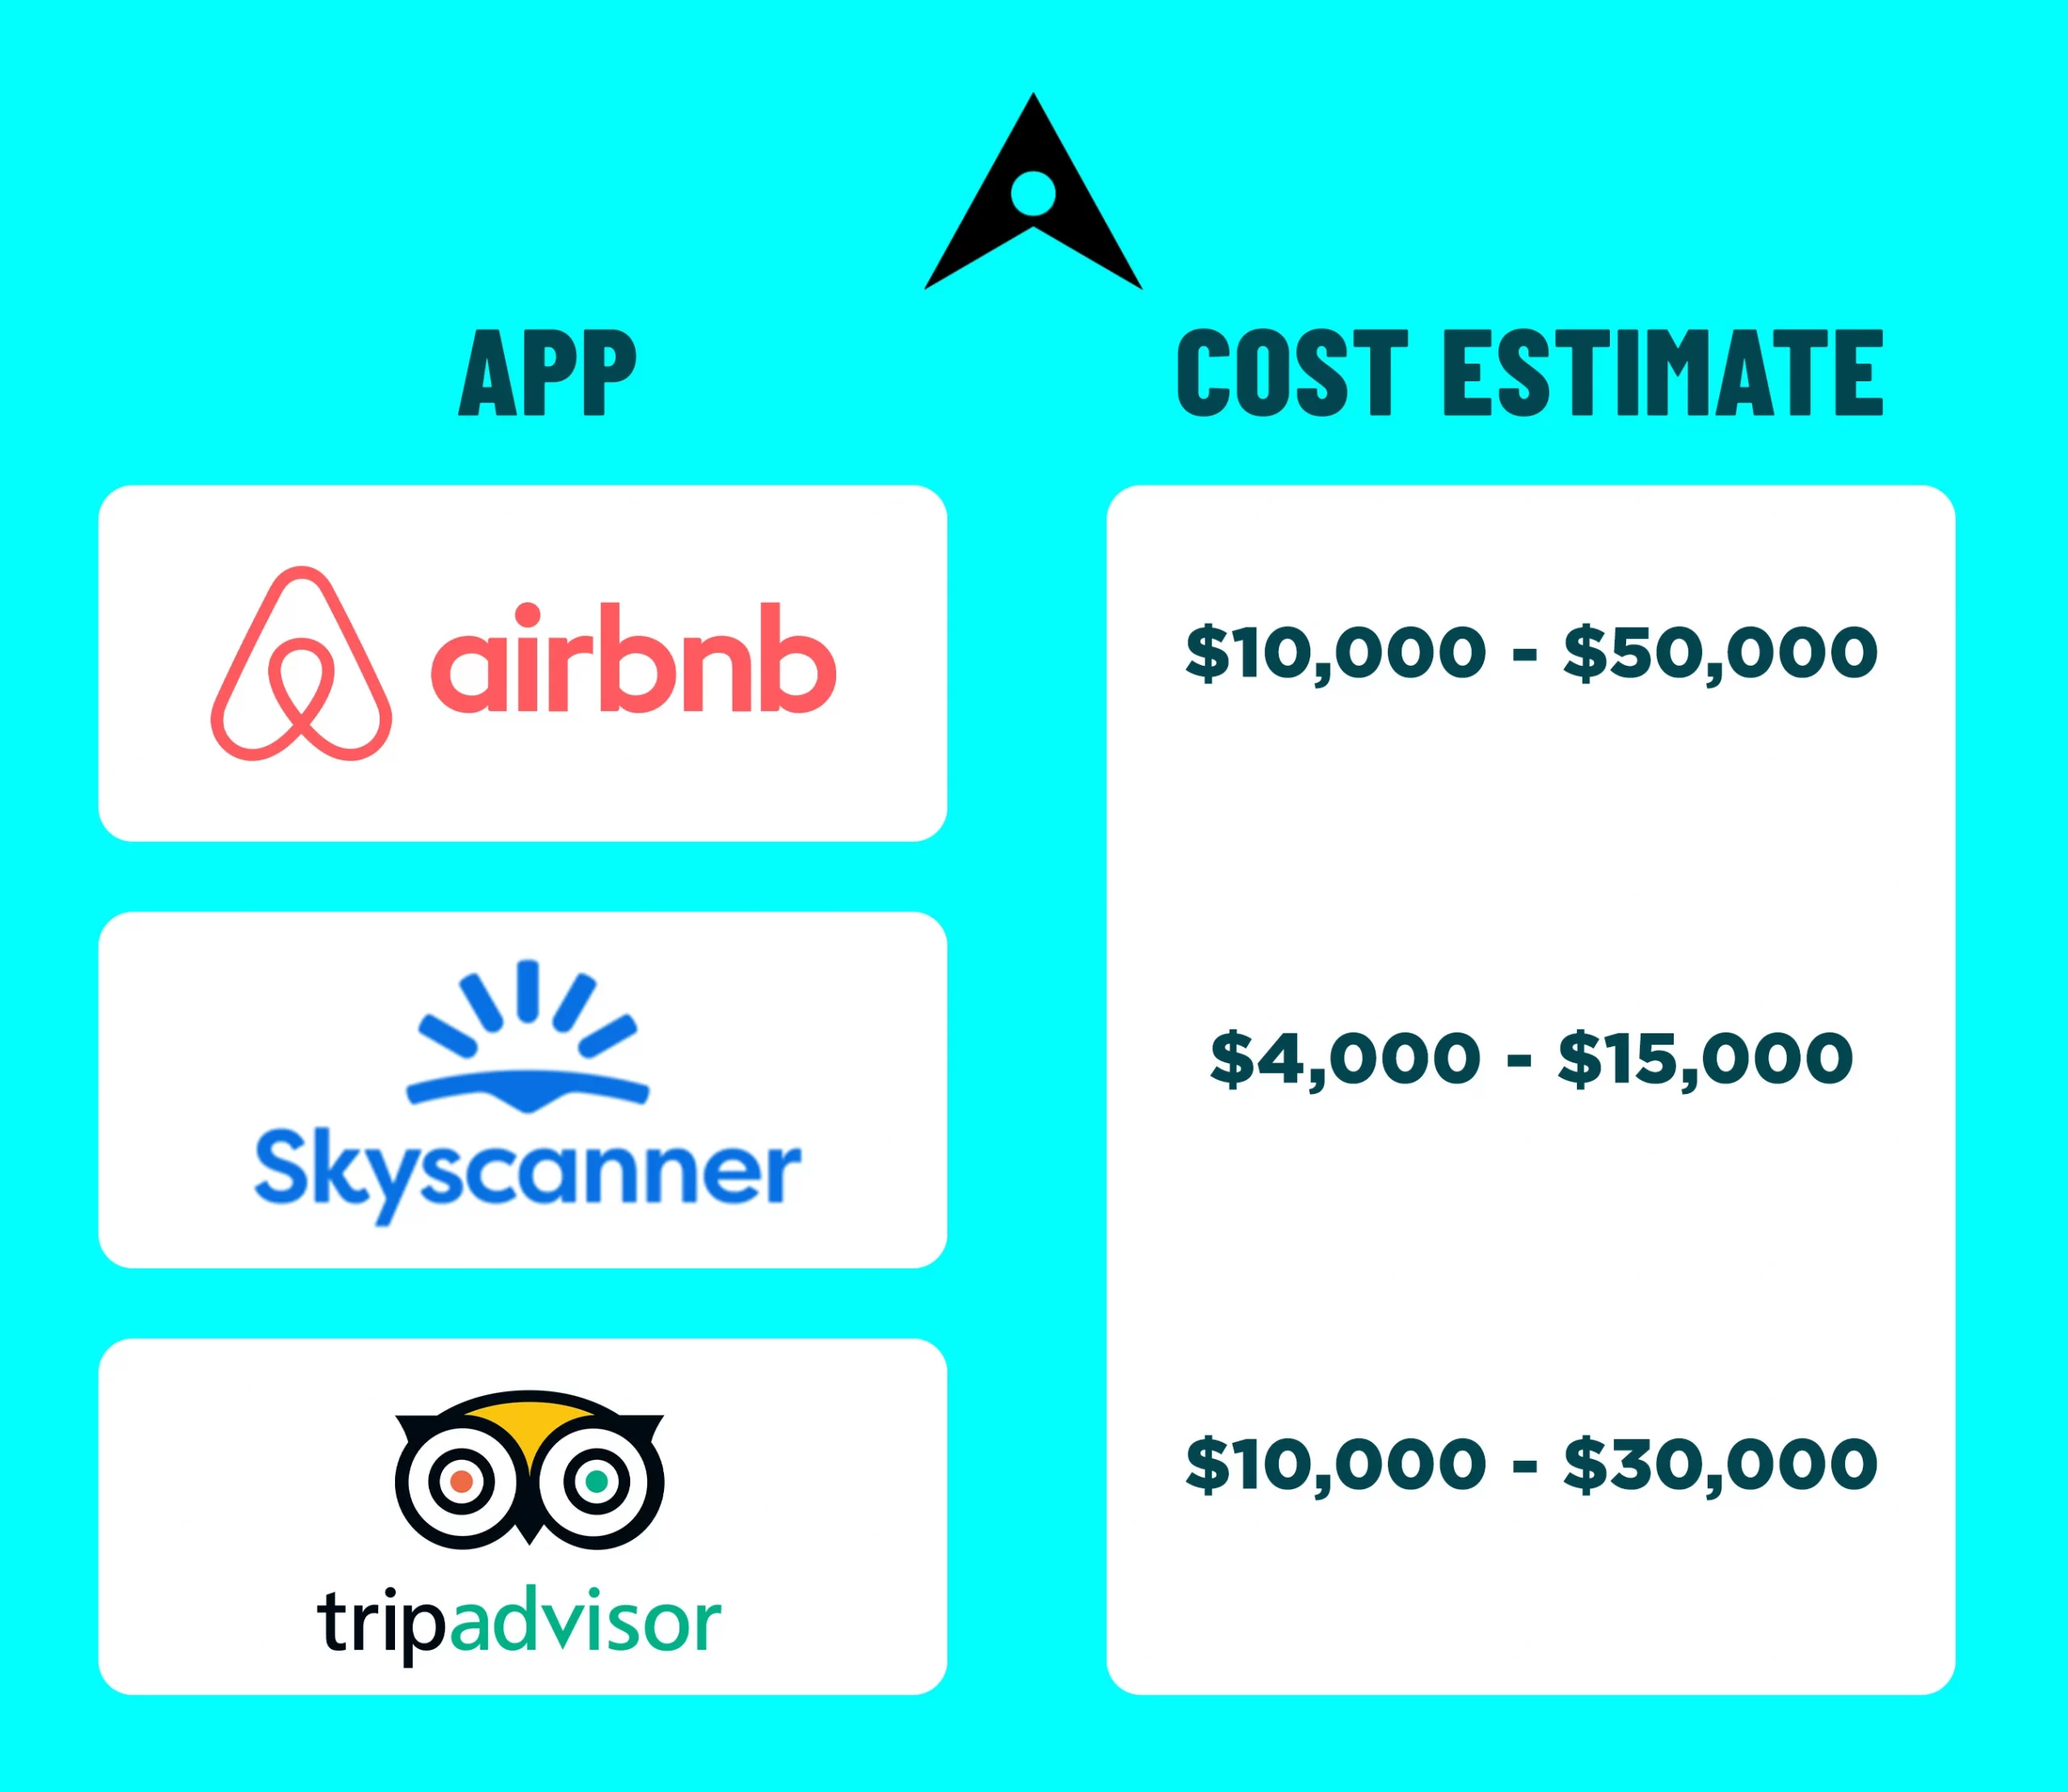 Travel App Development Cost According to Examples